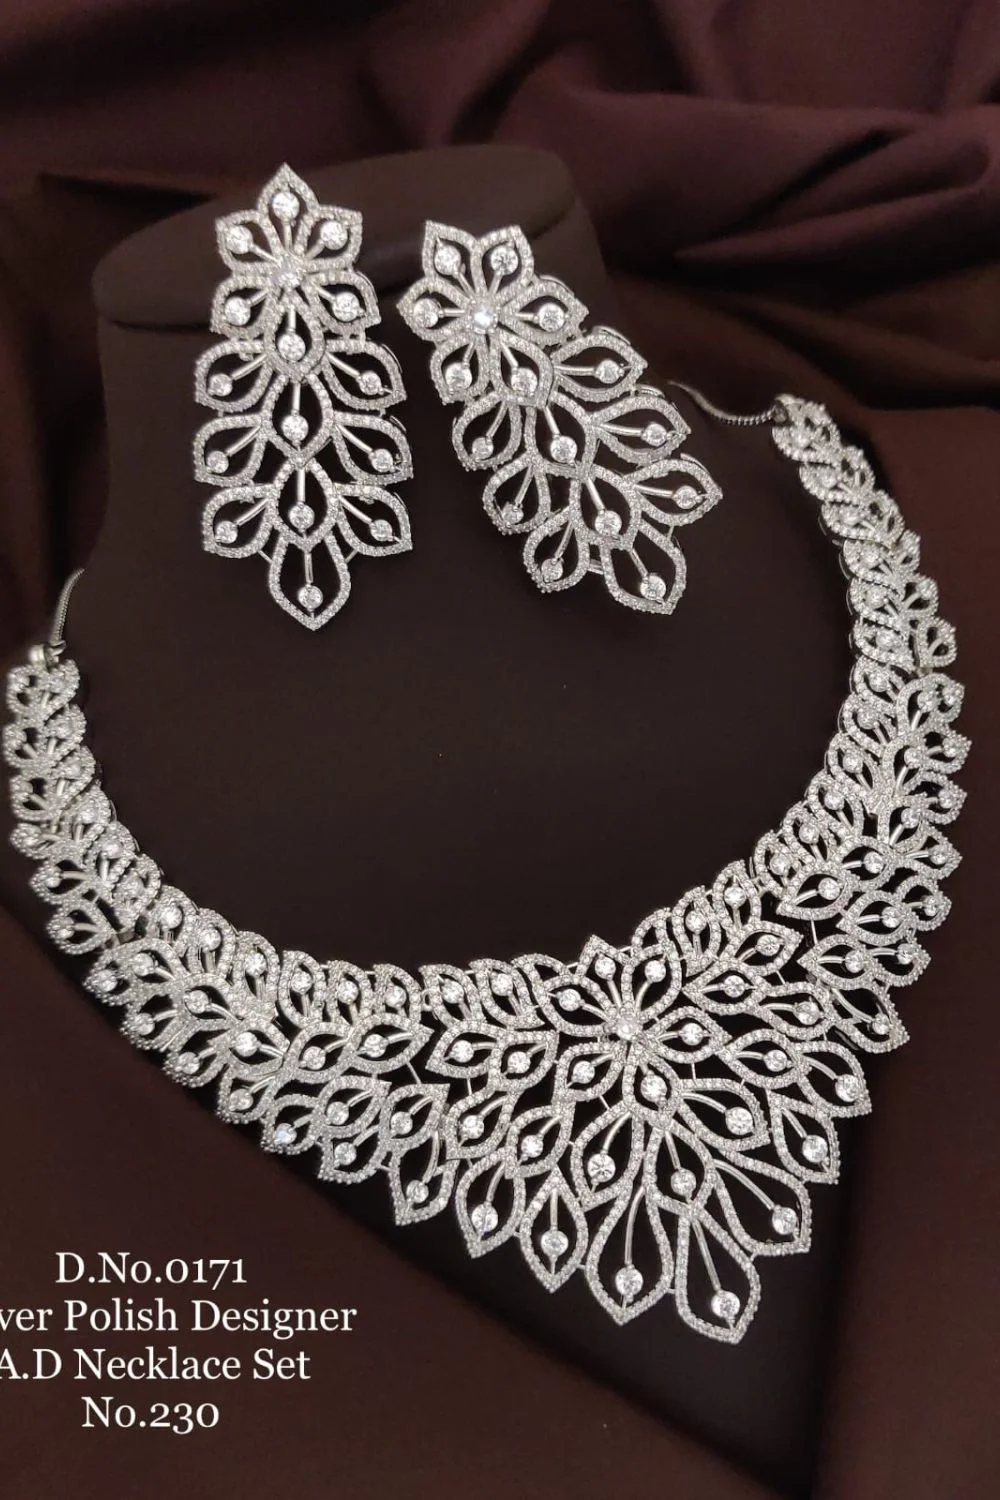 Unique Silver Polished Designer Necklace